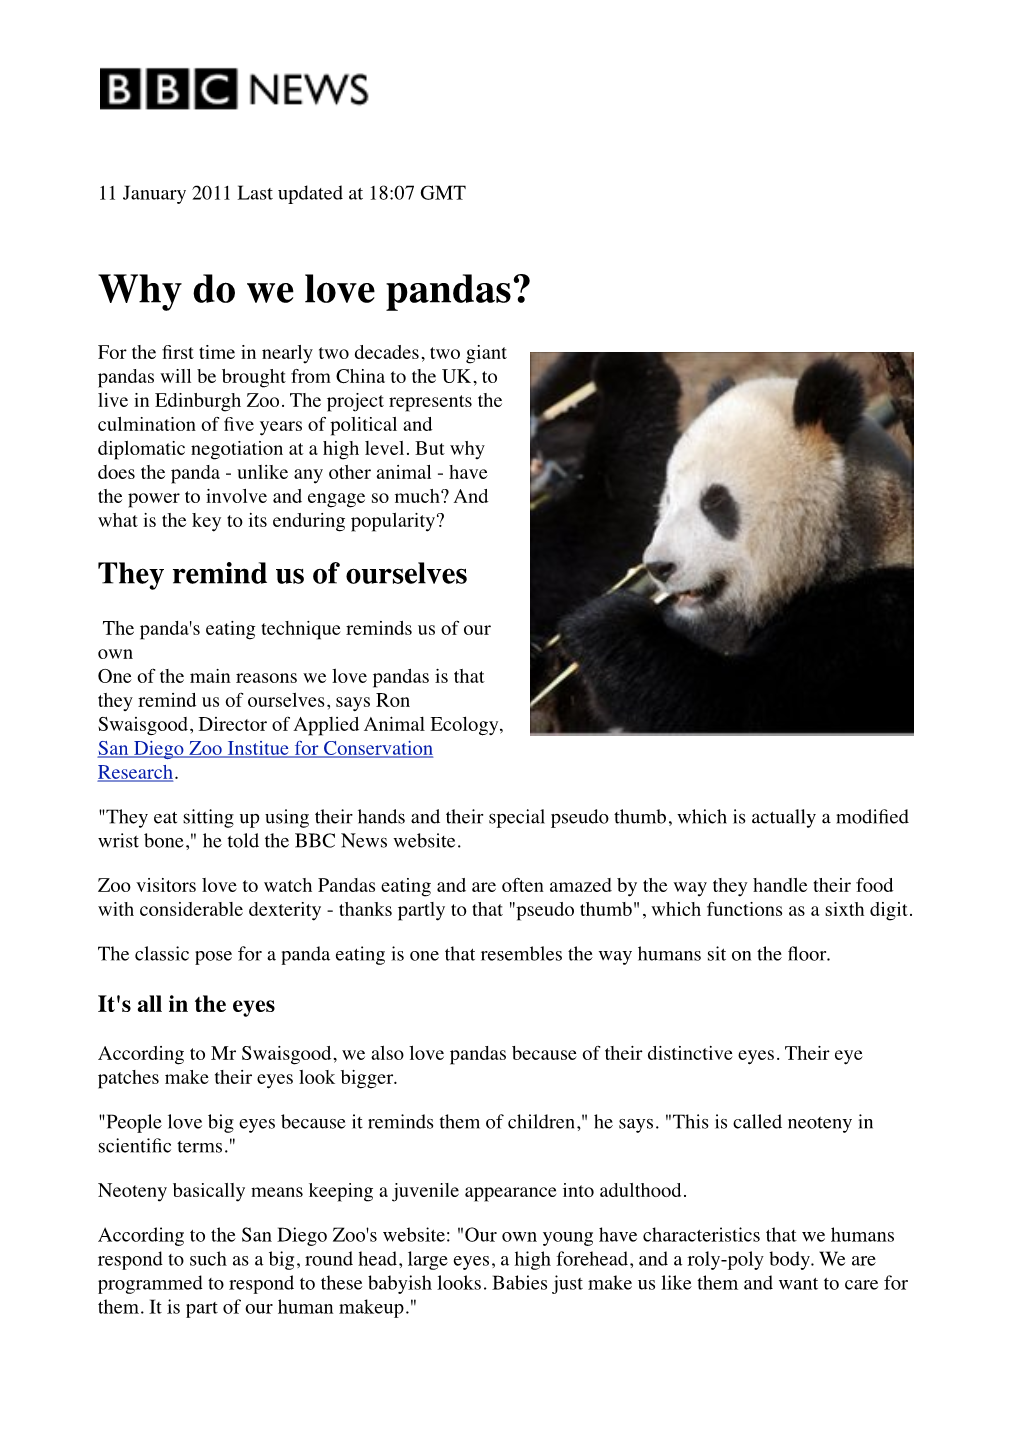 Why Do We Love Pandas?